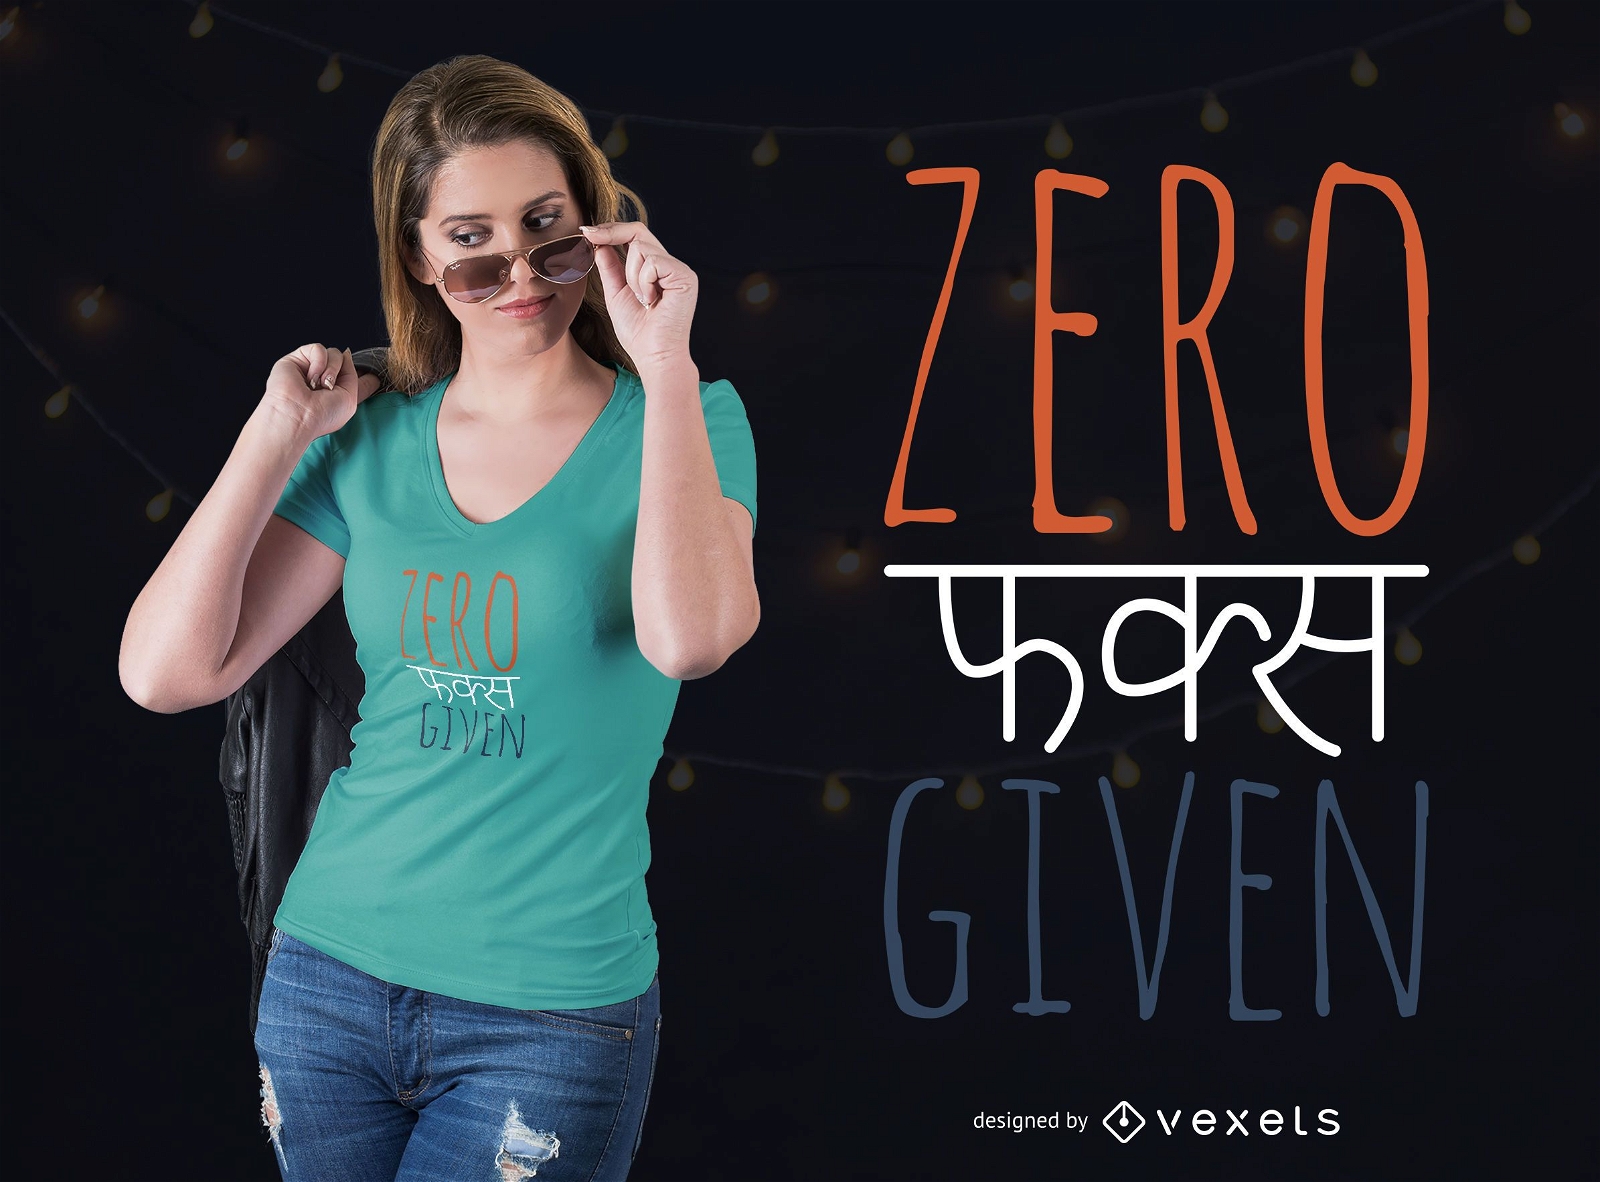 Zero Given T-Shirt Design